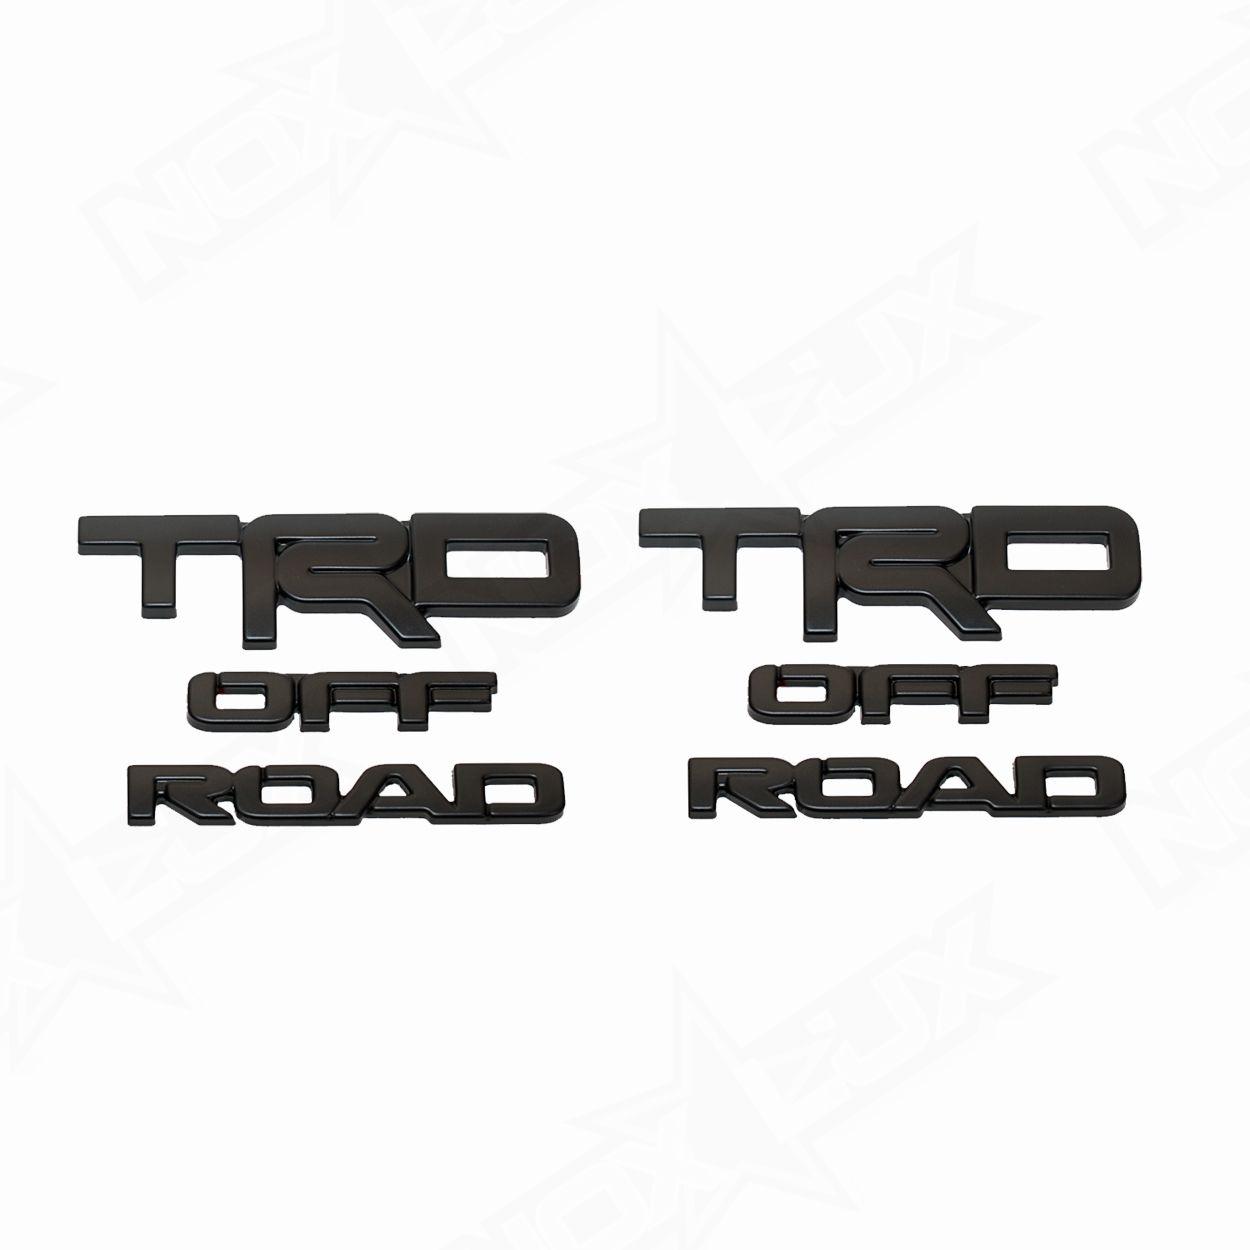 2018 Toyota Logo - 2017-2018 Toyota 4-Runner TRD Off-road Black Out Emblem Overlay Kits ...